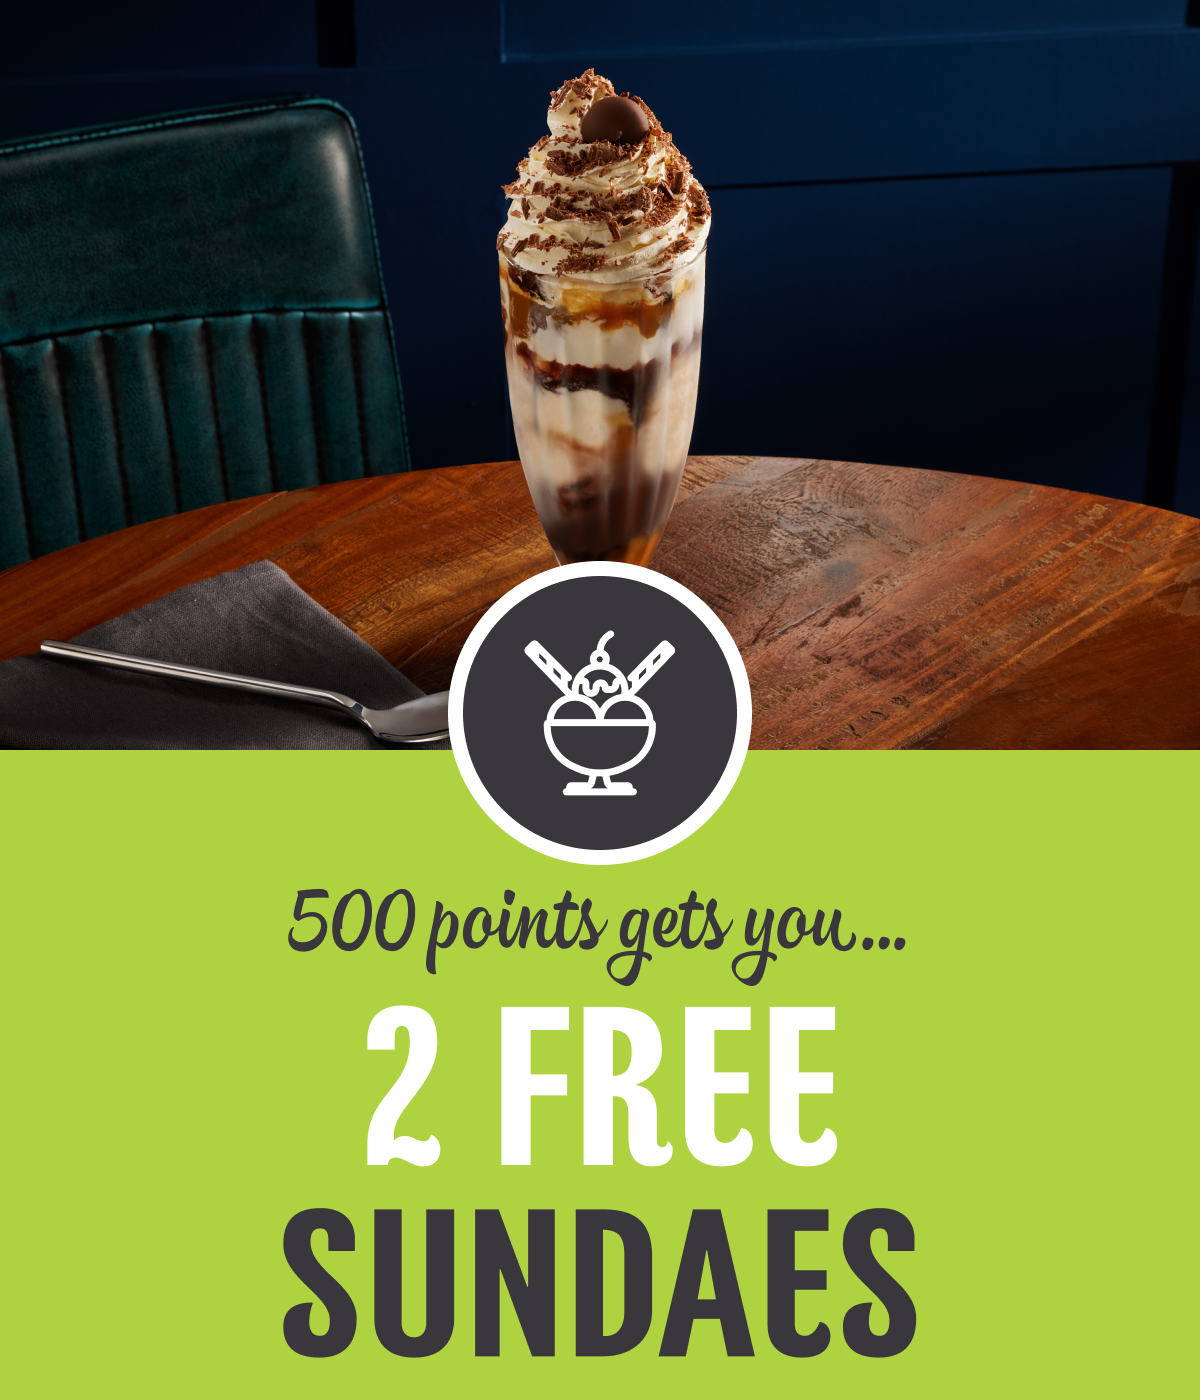 500 points gets you... 2 free sundaes